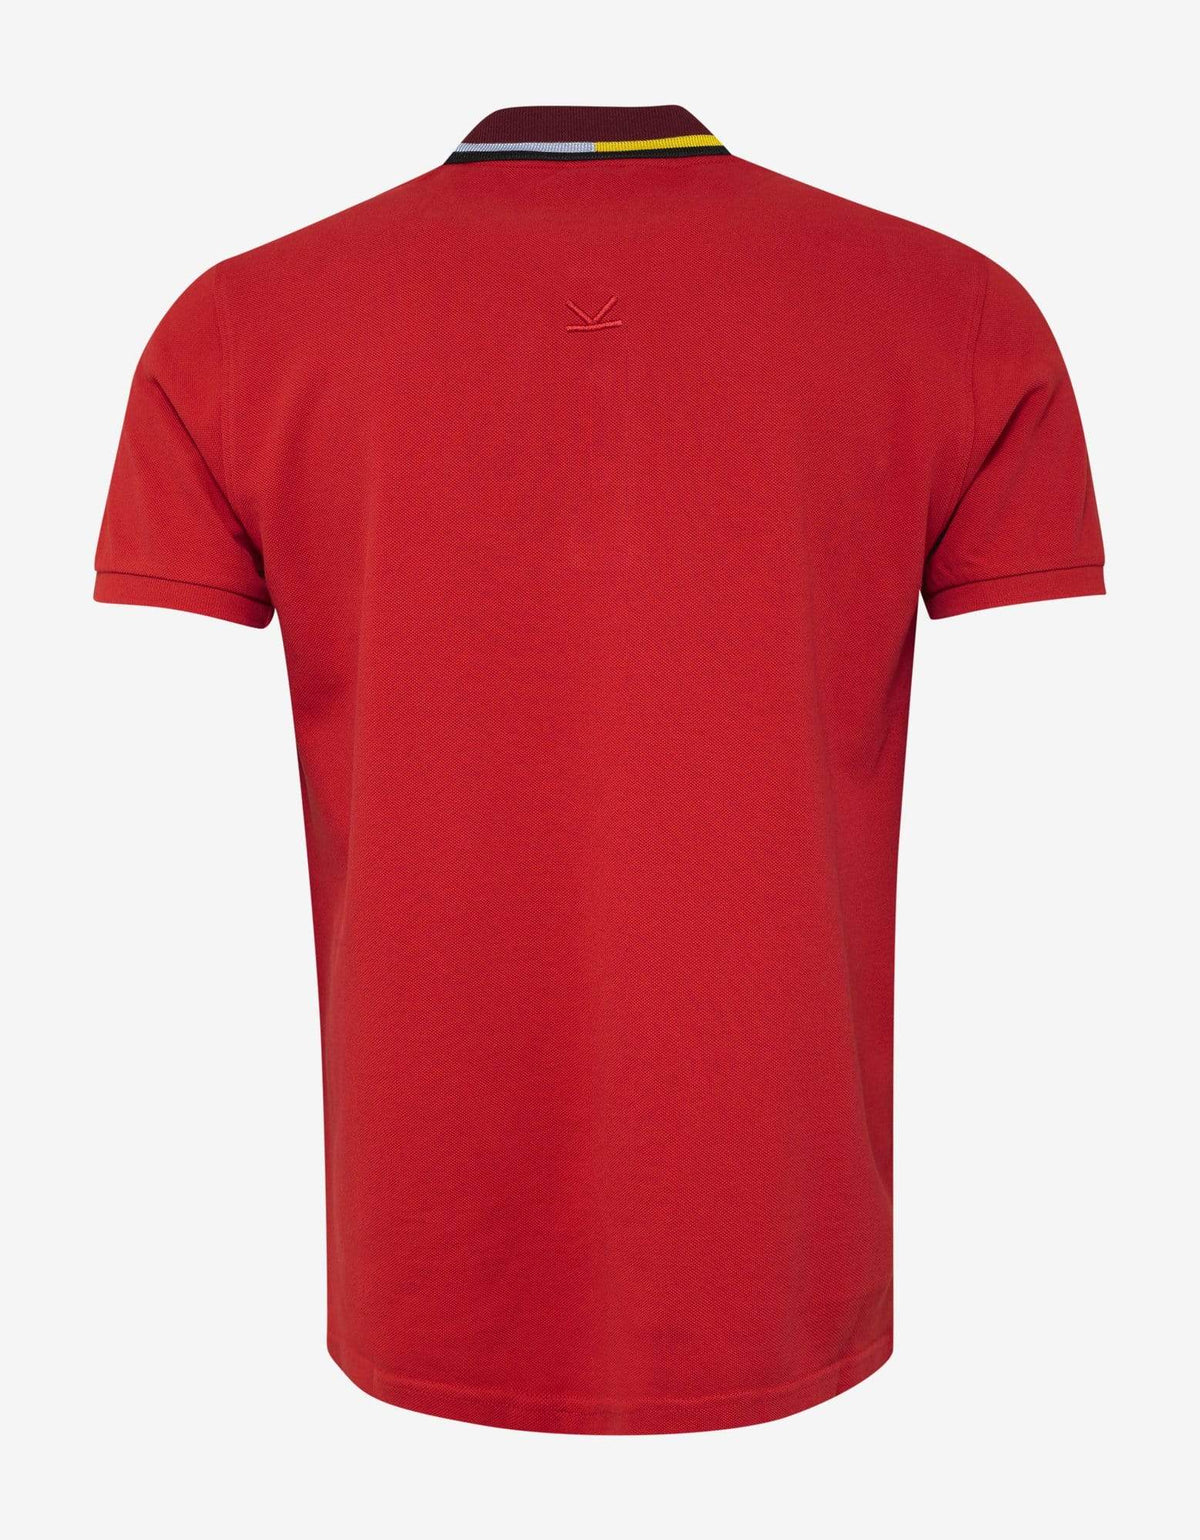 Kenzo Red Bi-Colour Polo T-Shirt